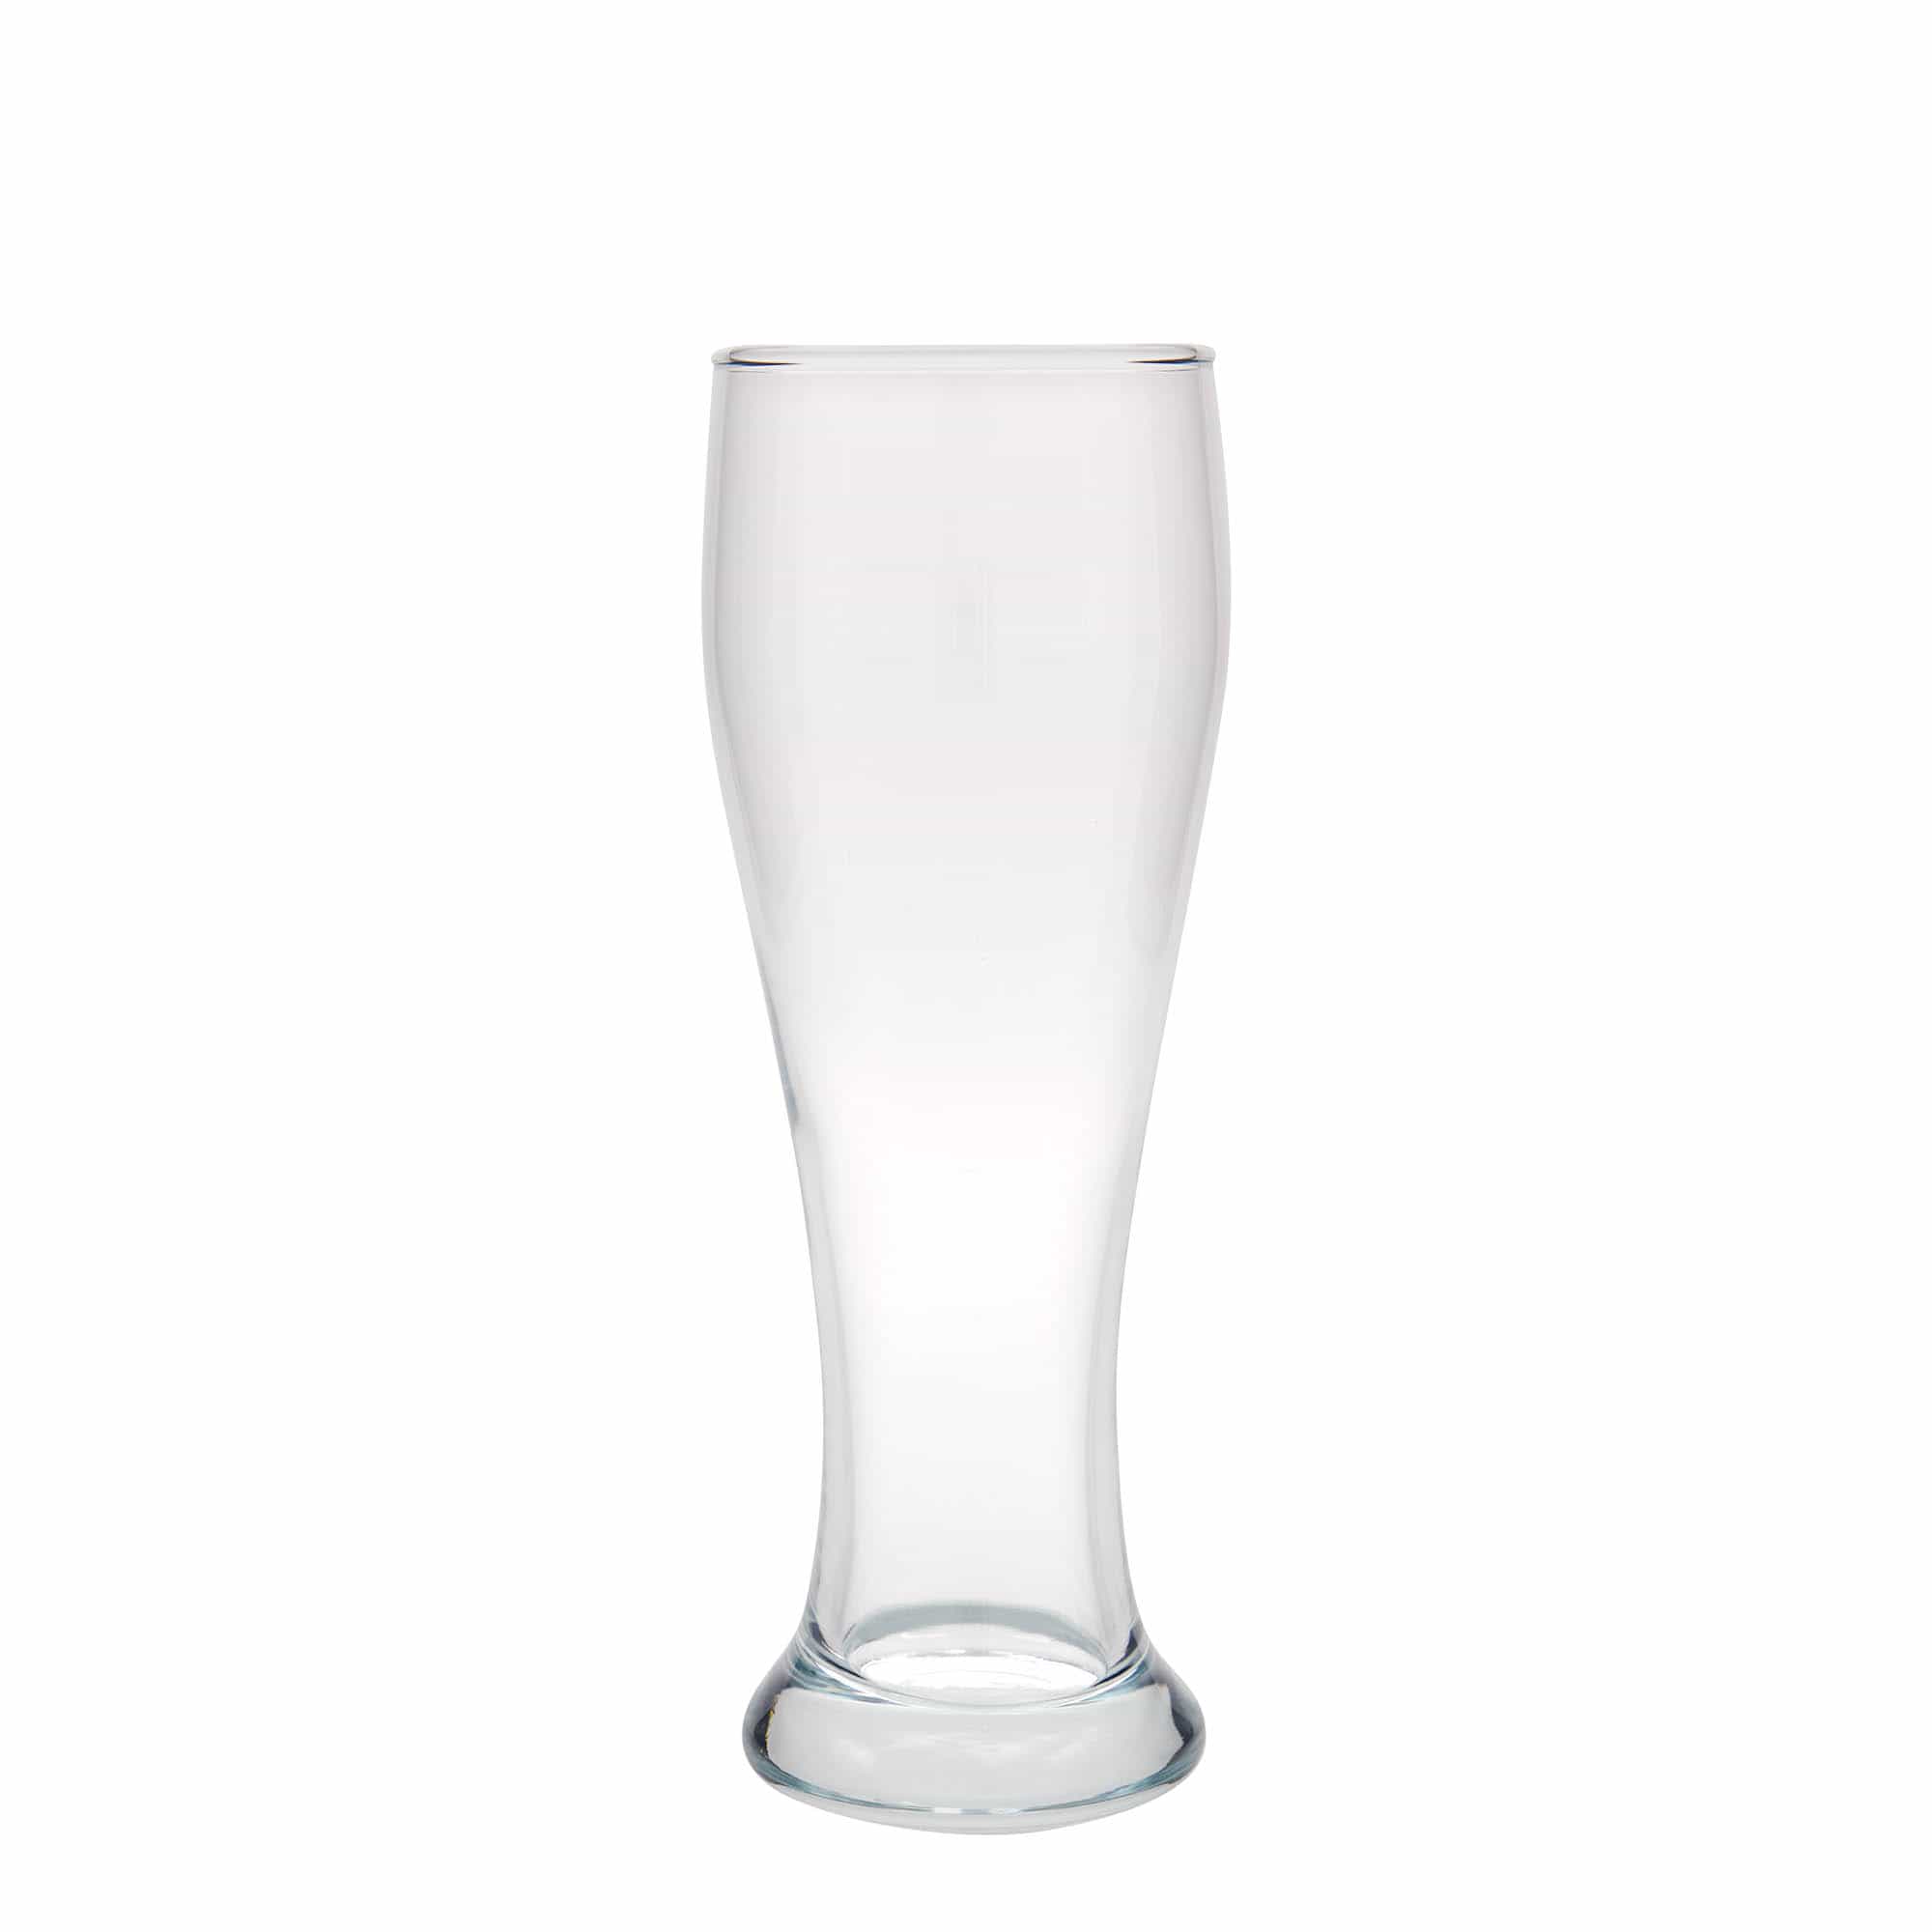 500 ml beer glass 'Ranft', glass